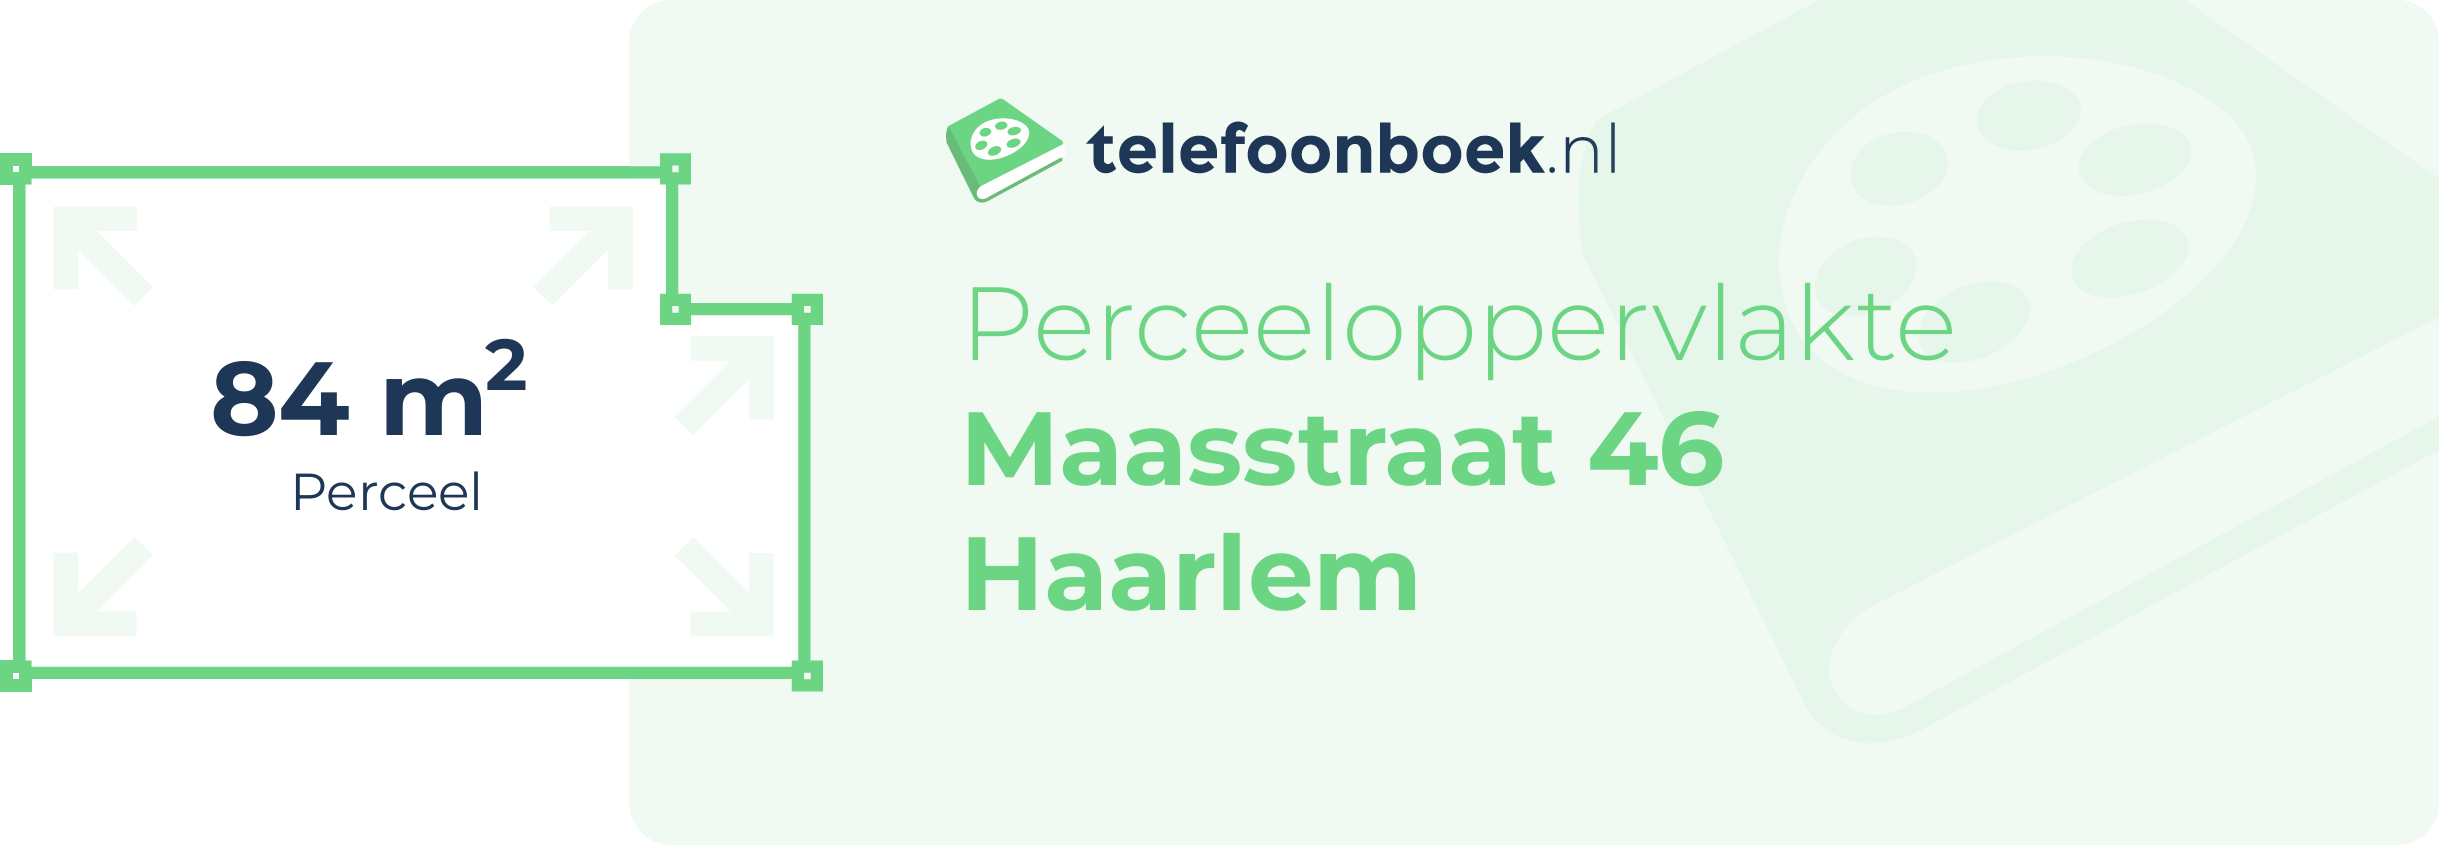 Perceeloppervlakte Maasstraat 46 Haarlem